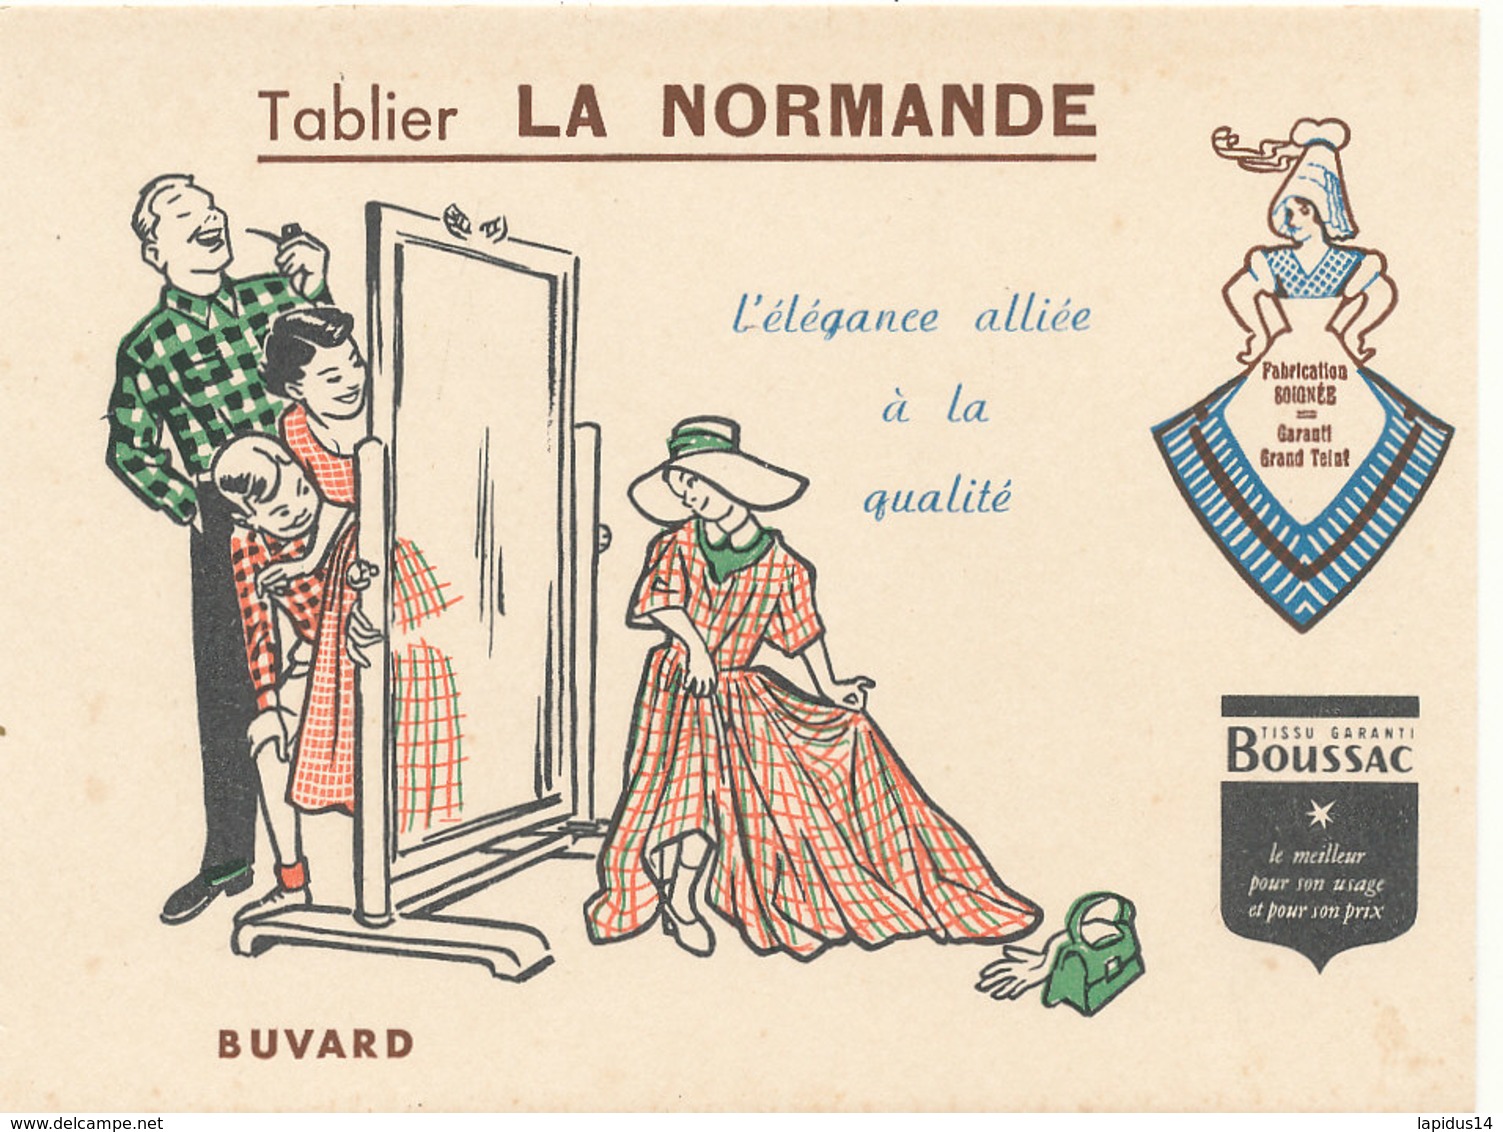 BU 1523 -/  BUVARD  TABLIER  LA NORMANDE - Textile & Vestimentaire